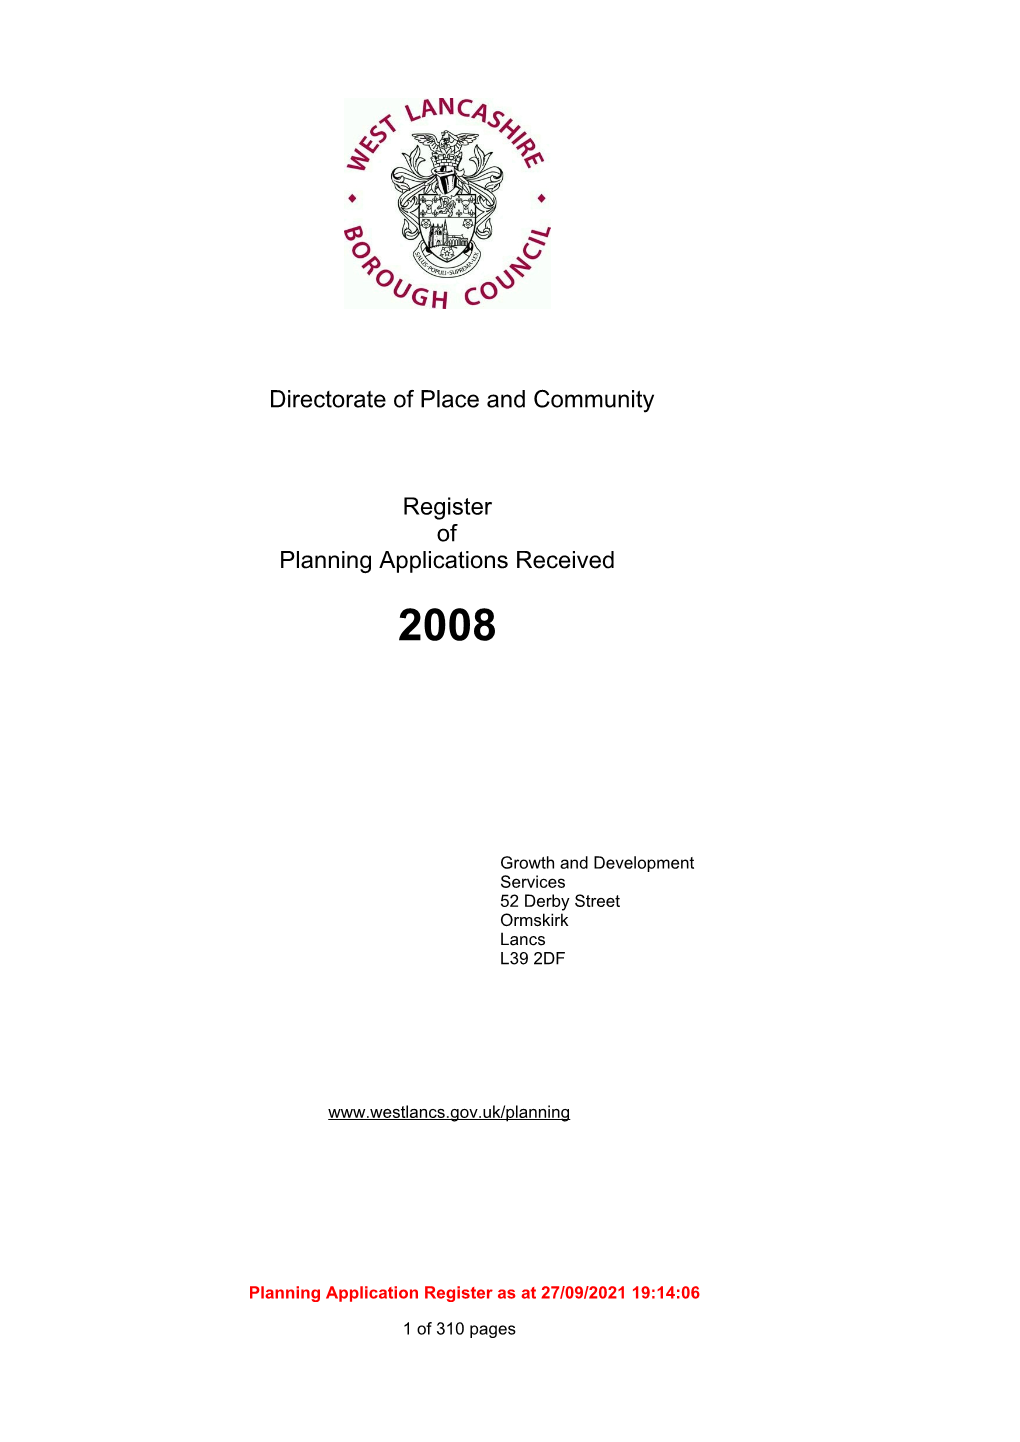 Register of Planning Applications 2008